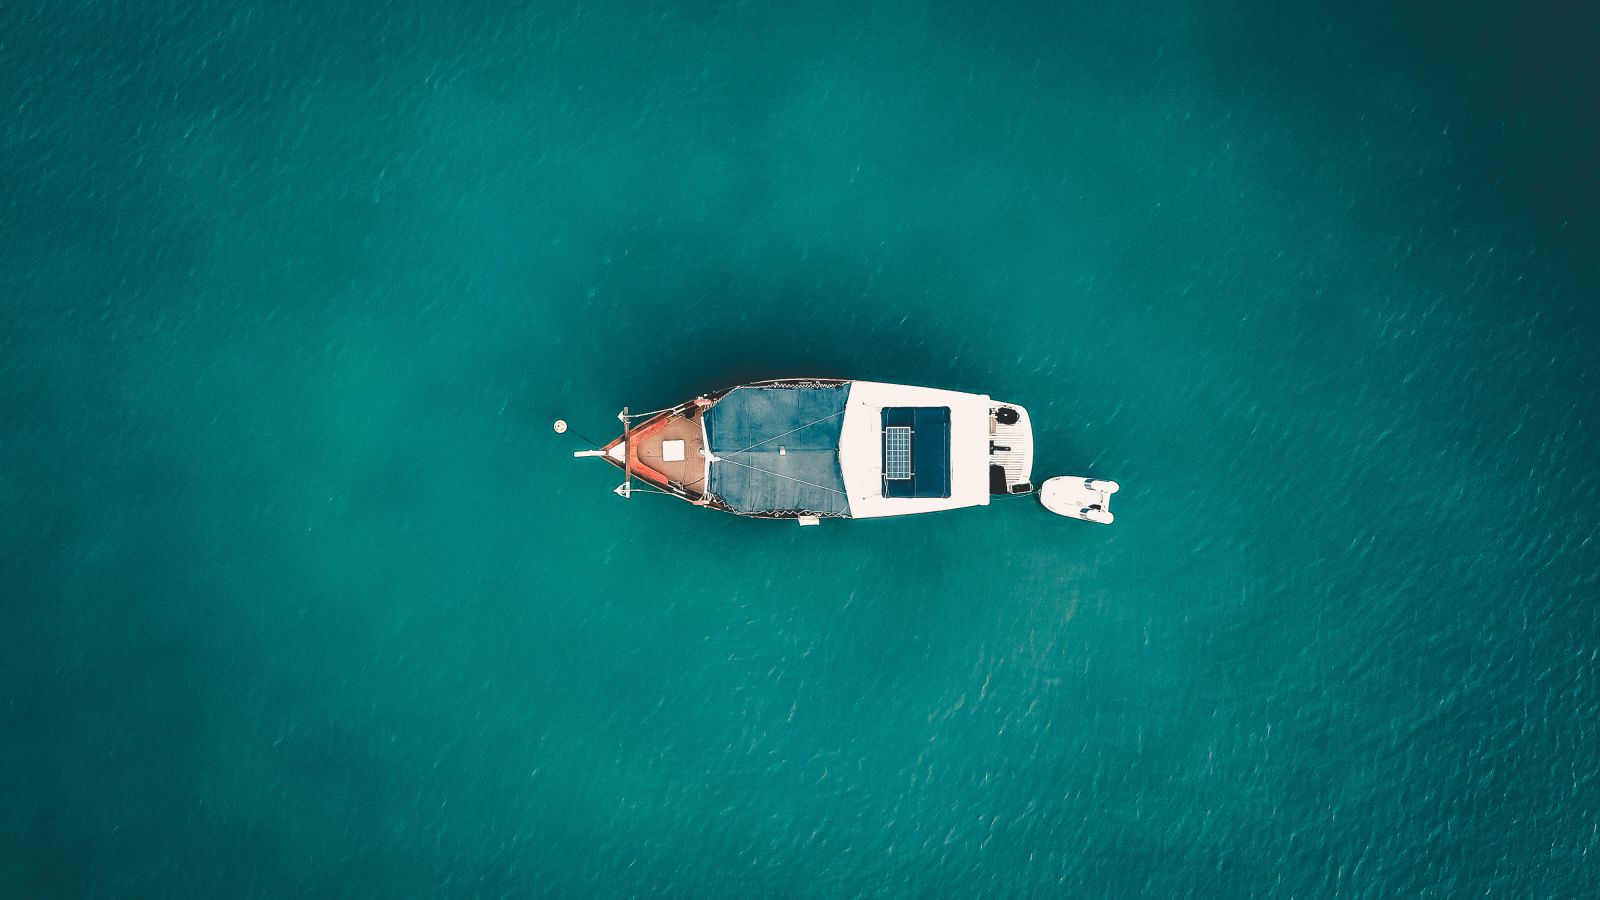 Barco no mar parado